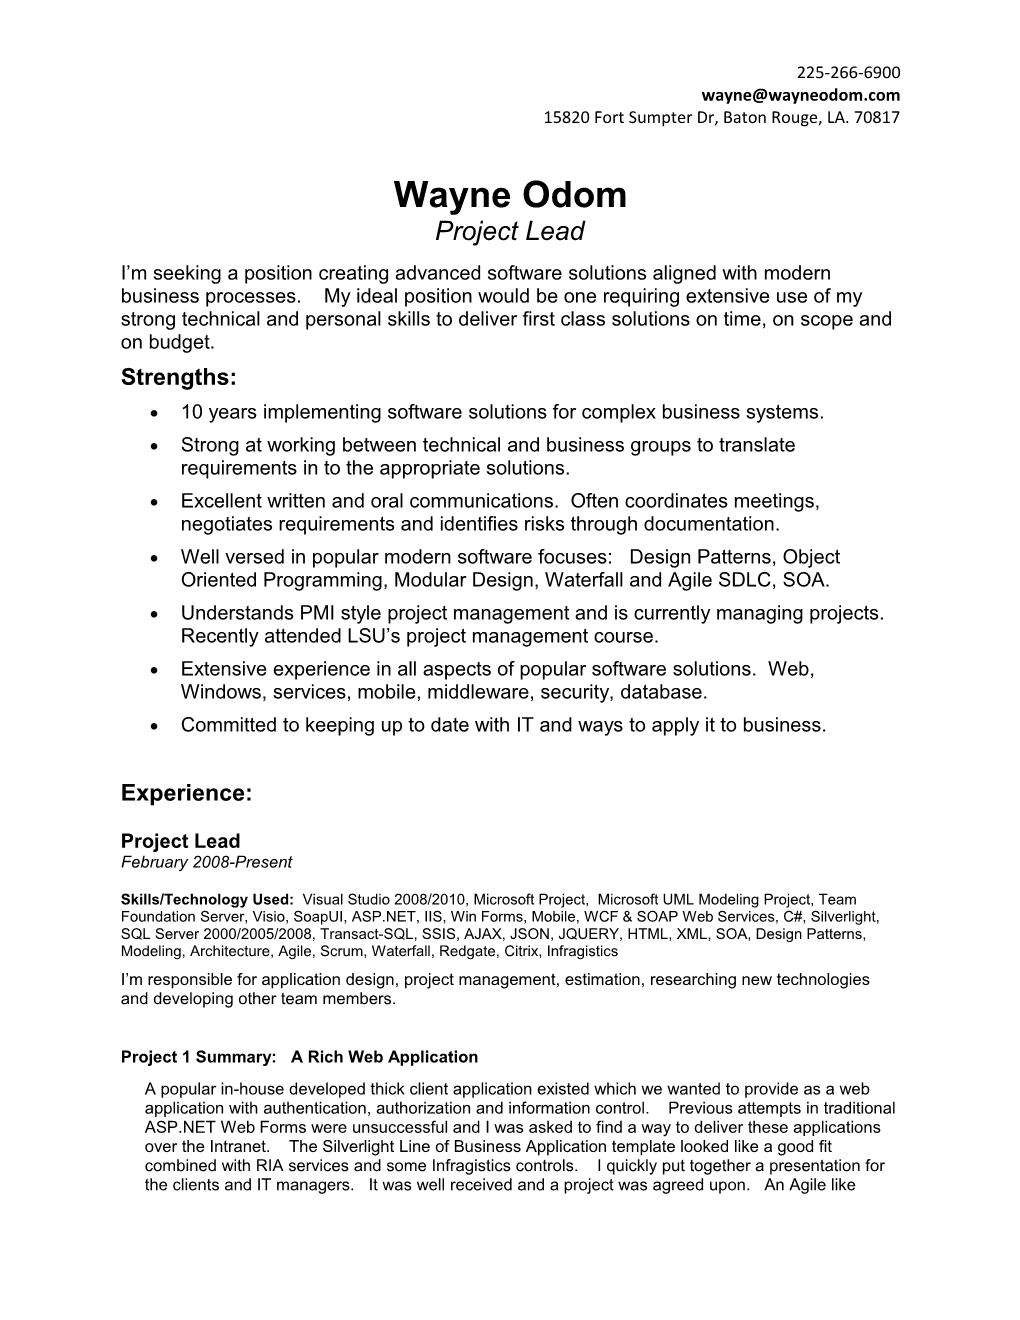 Wayne Wayneodom.Com